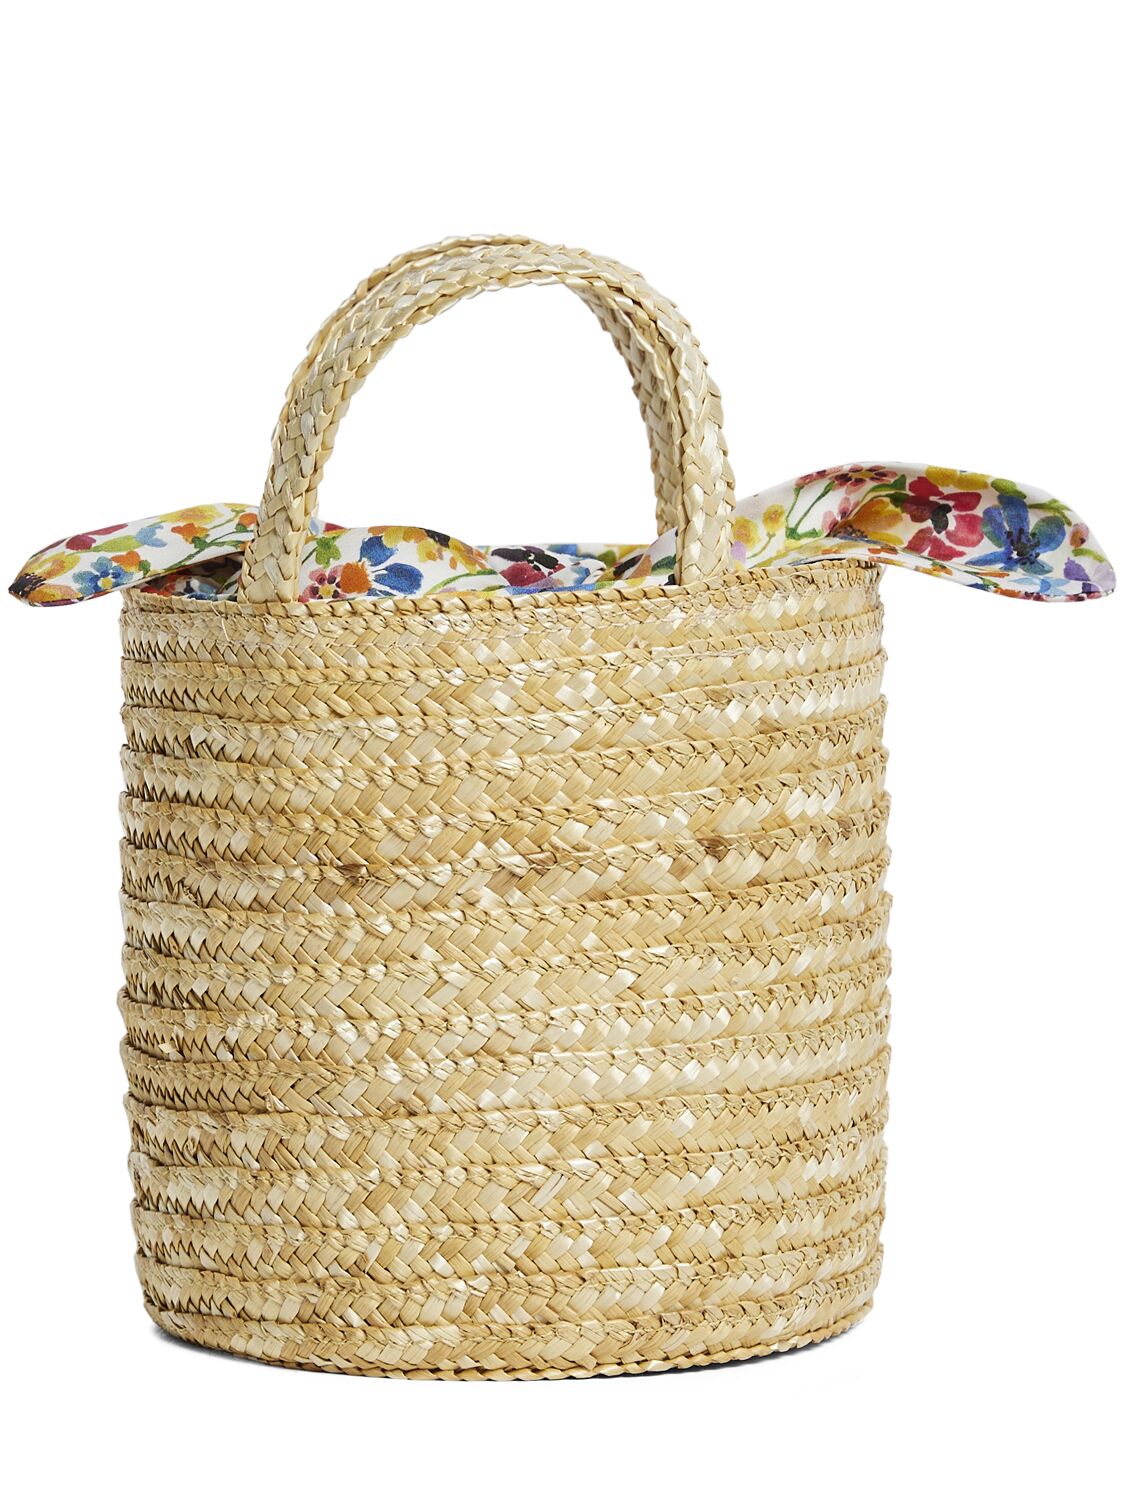 Image of Raffia & Liberty Basket Bag